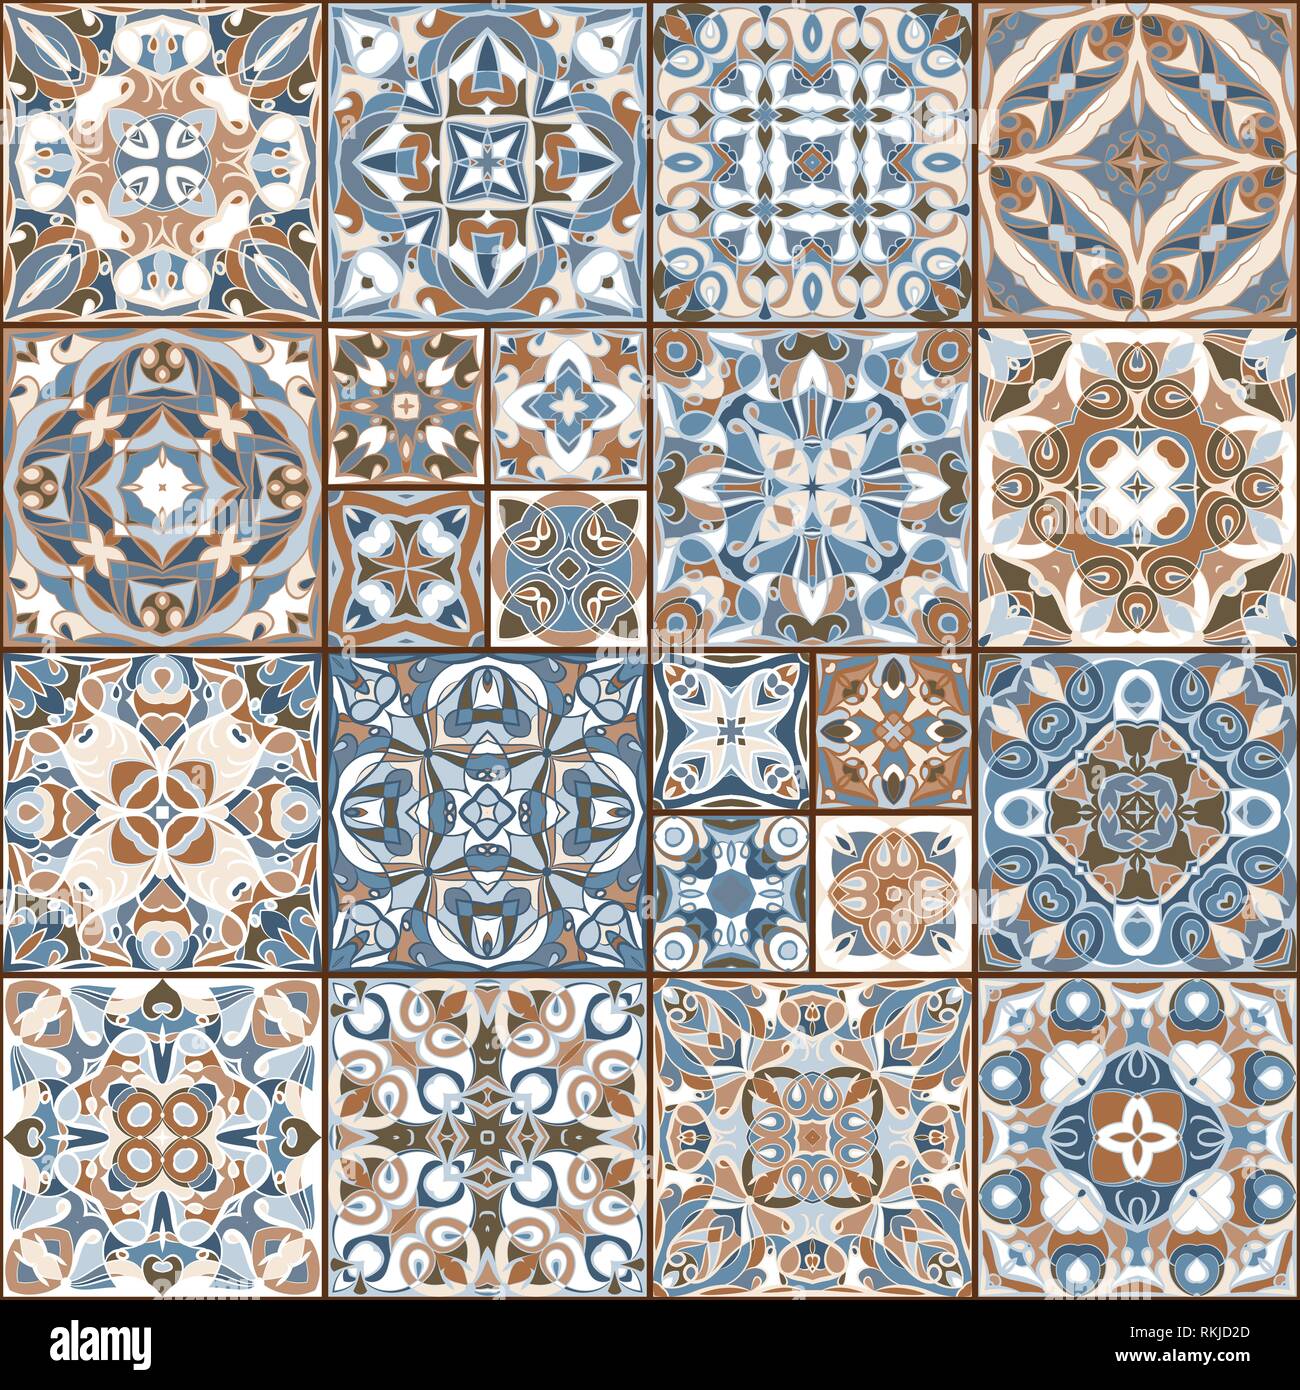 Rinascita in ceramica Immagini Vettoriali Stock - Pagina 2 - Alamy